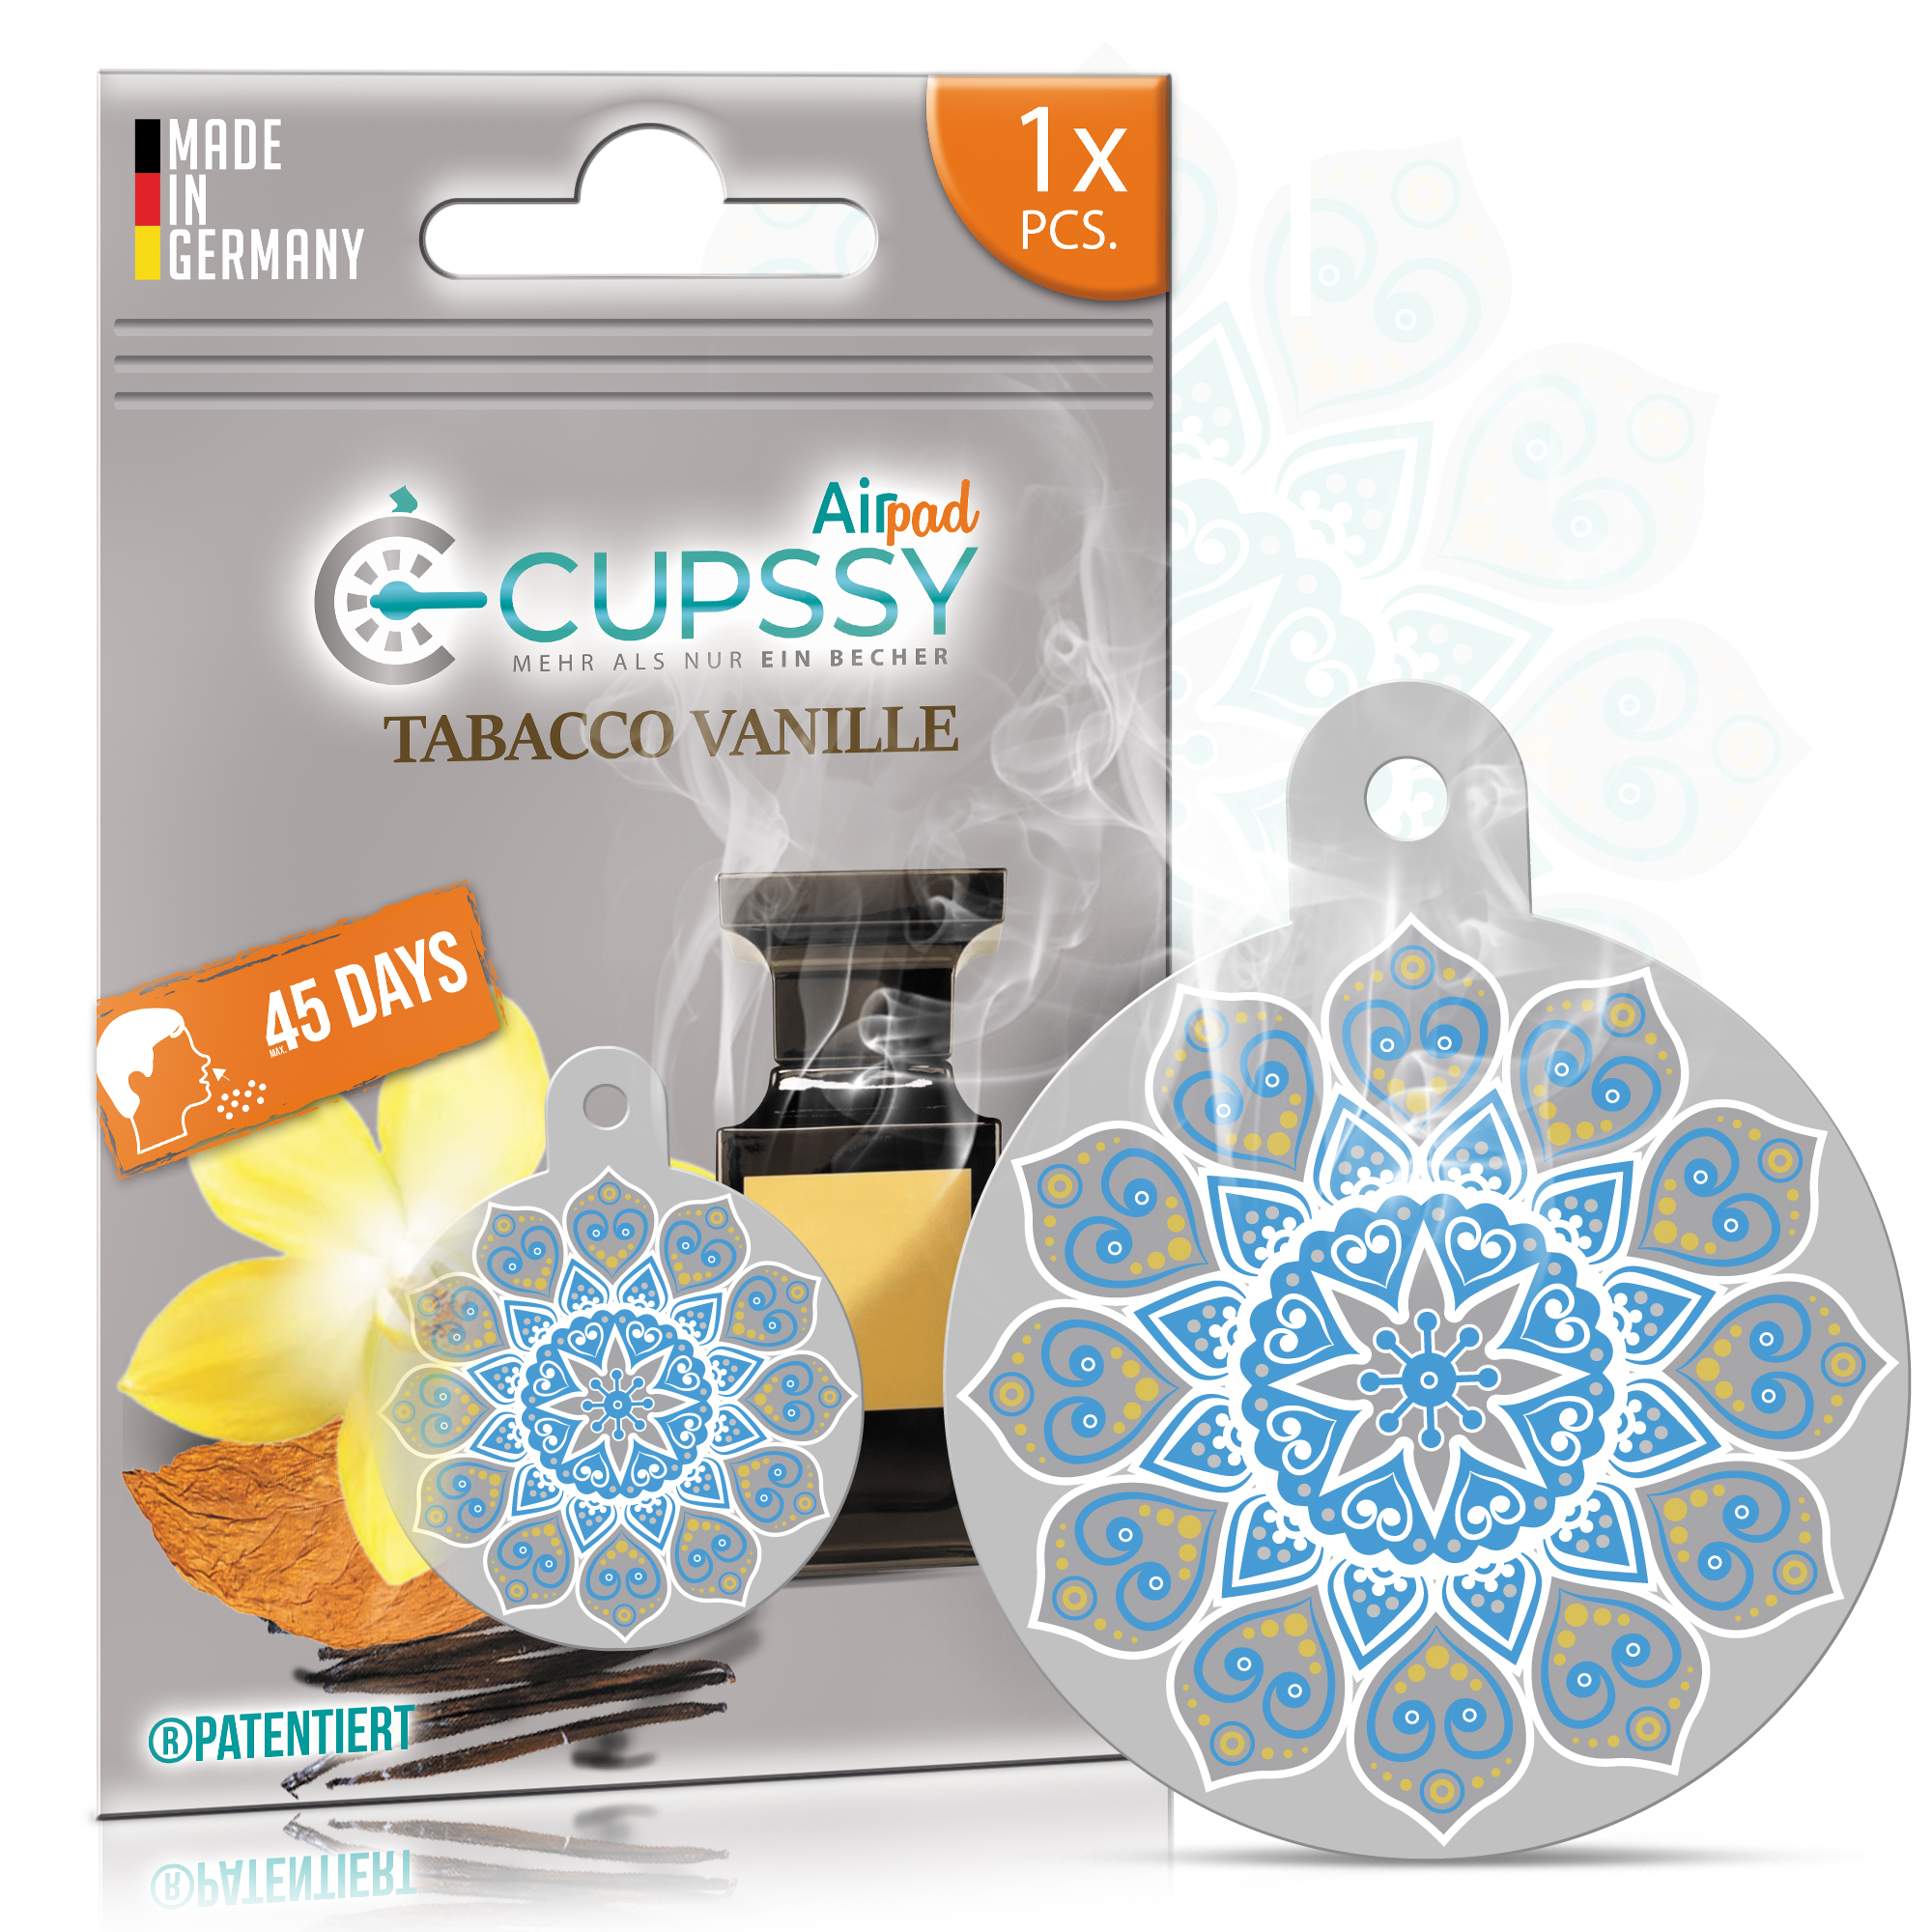 Cupssy AirPad ® I Inspiriert durch Tobacco Vanille, Parfümierter DuftPad